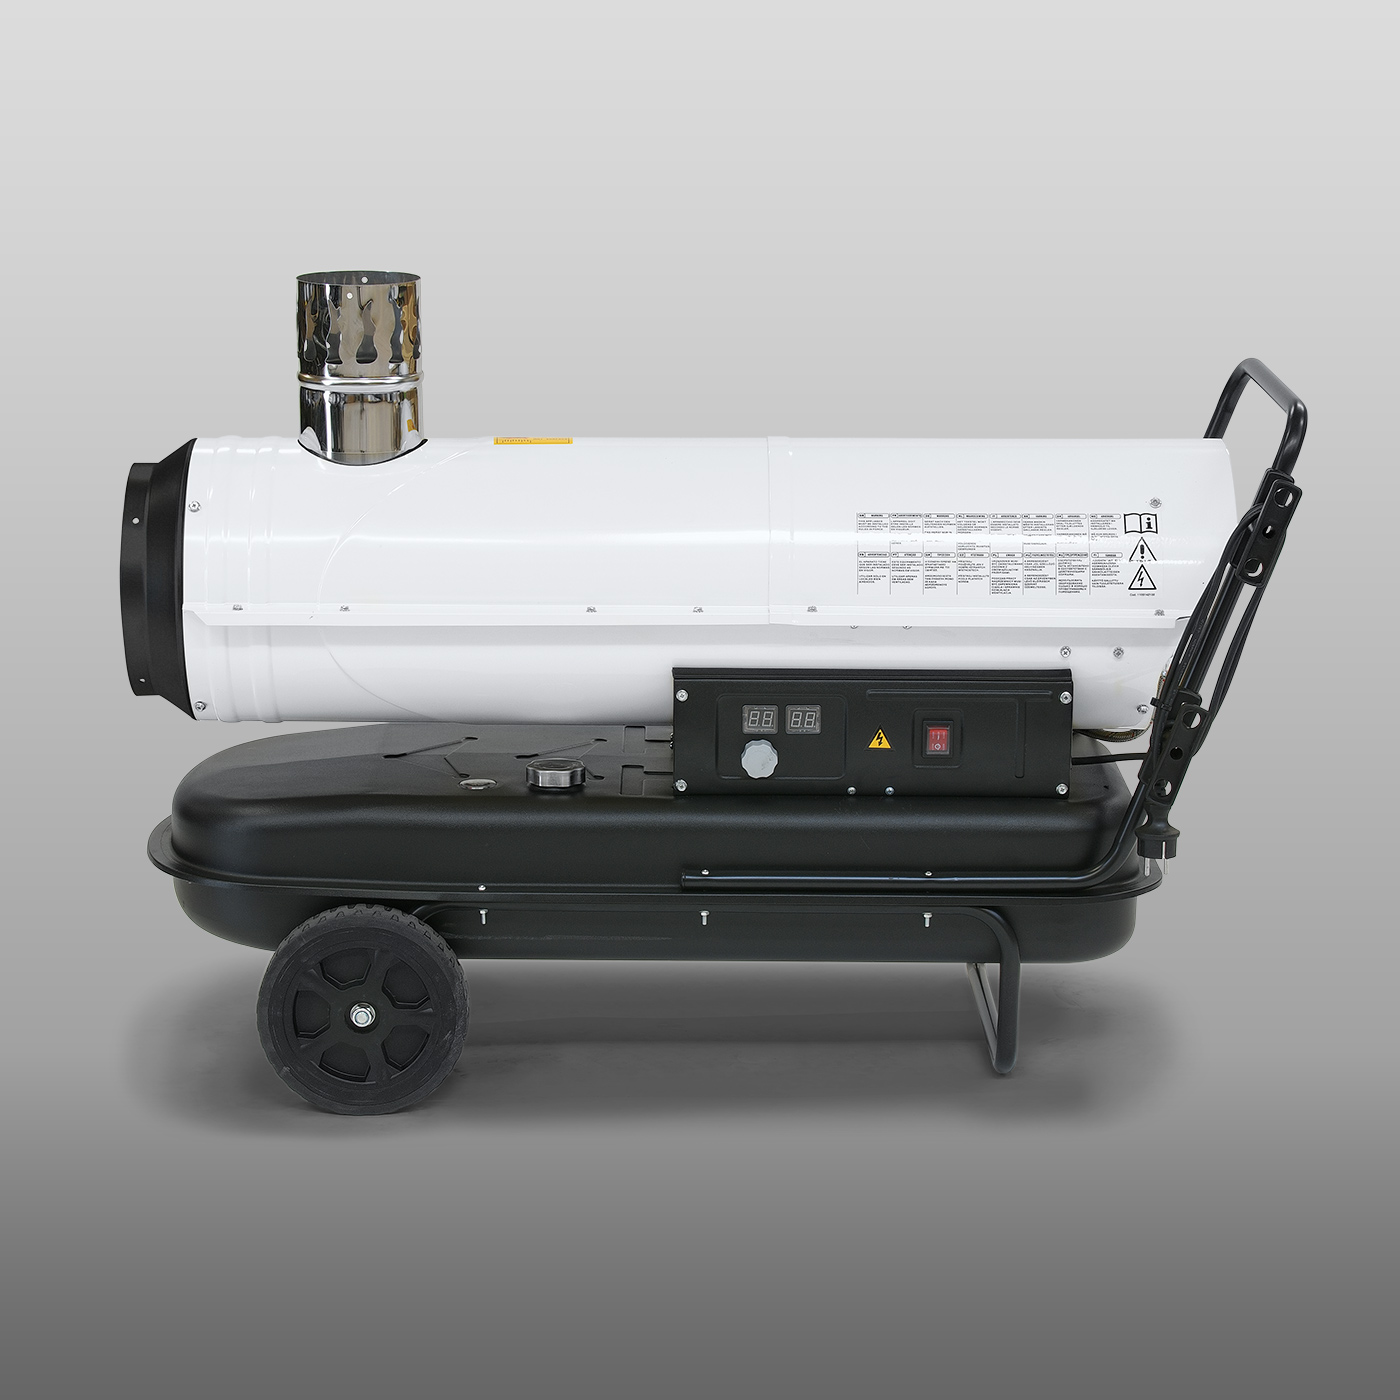 Canon air chaud fioul (compresseur) - SPLUS - Chauffage mobile